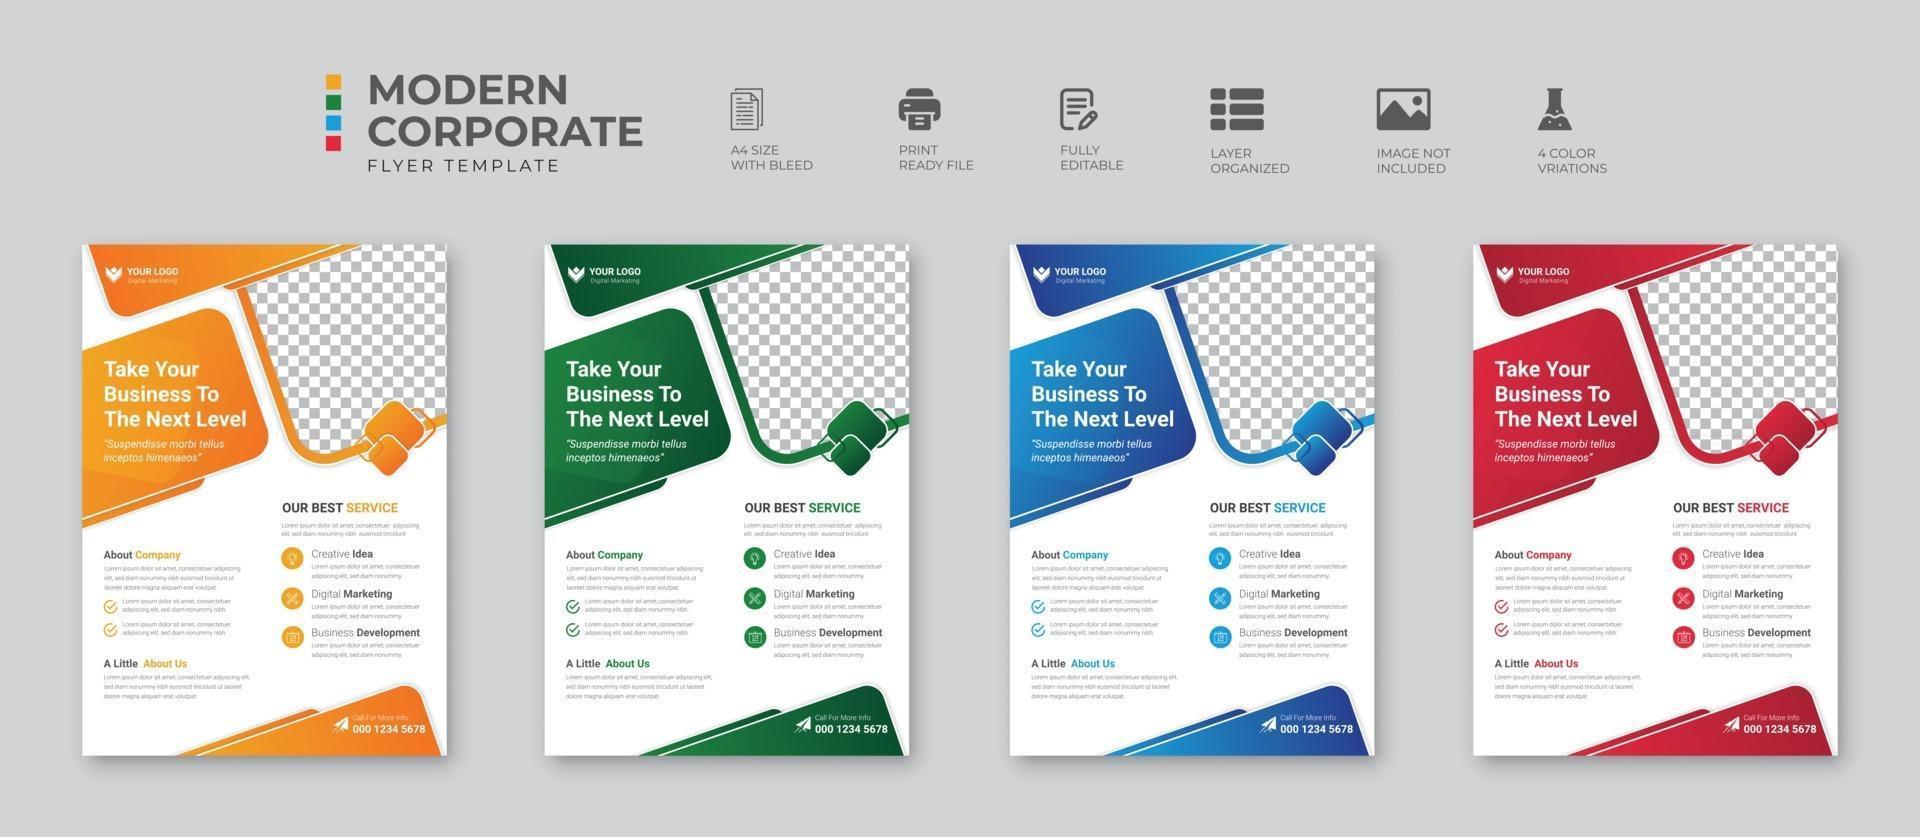 Corporate business digital marketing agency flyer design vector